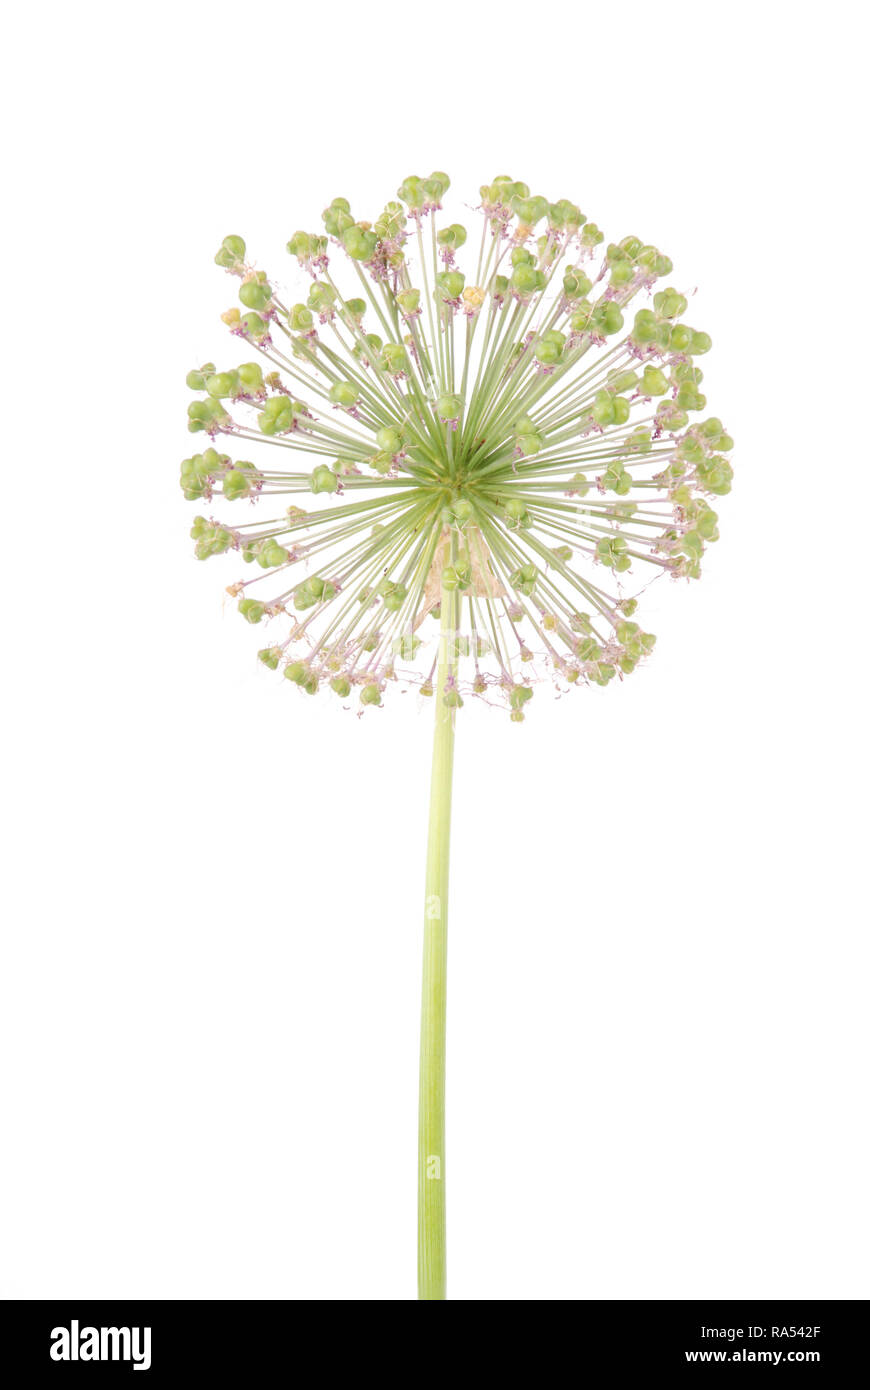 Allium flower isolated on white background Stock Photo